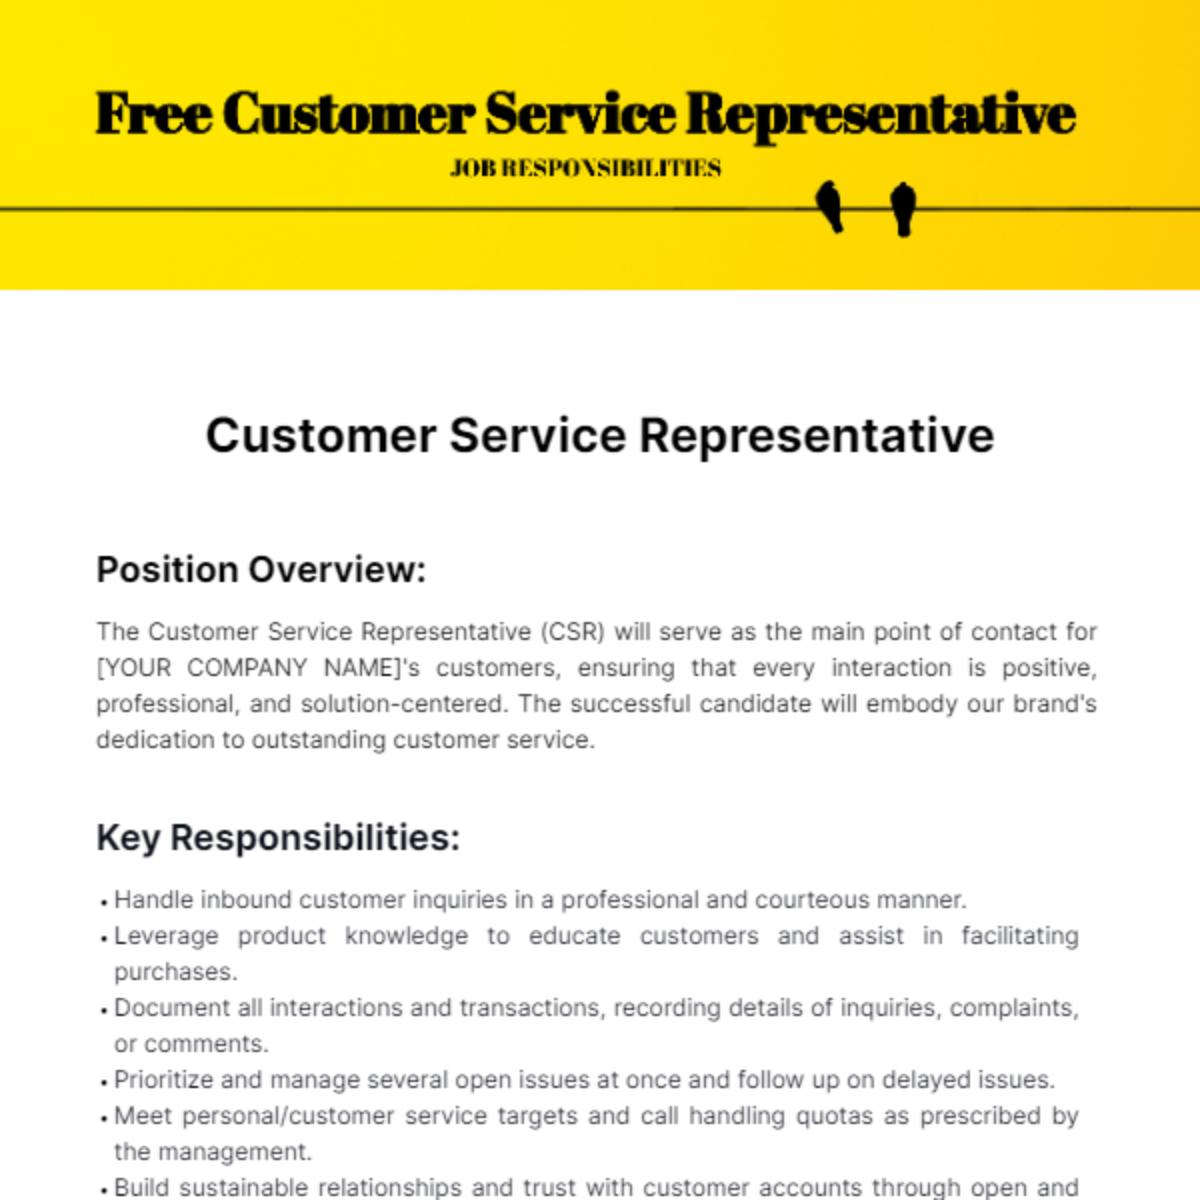 Free Customer Service Representative Job Responsibilities Template